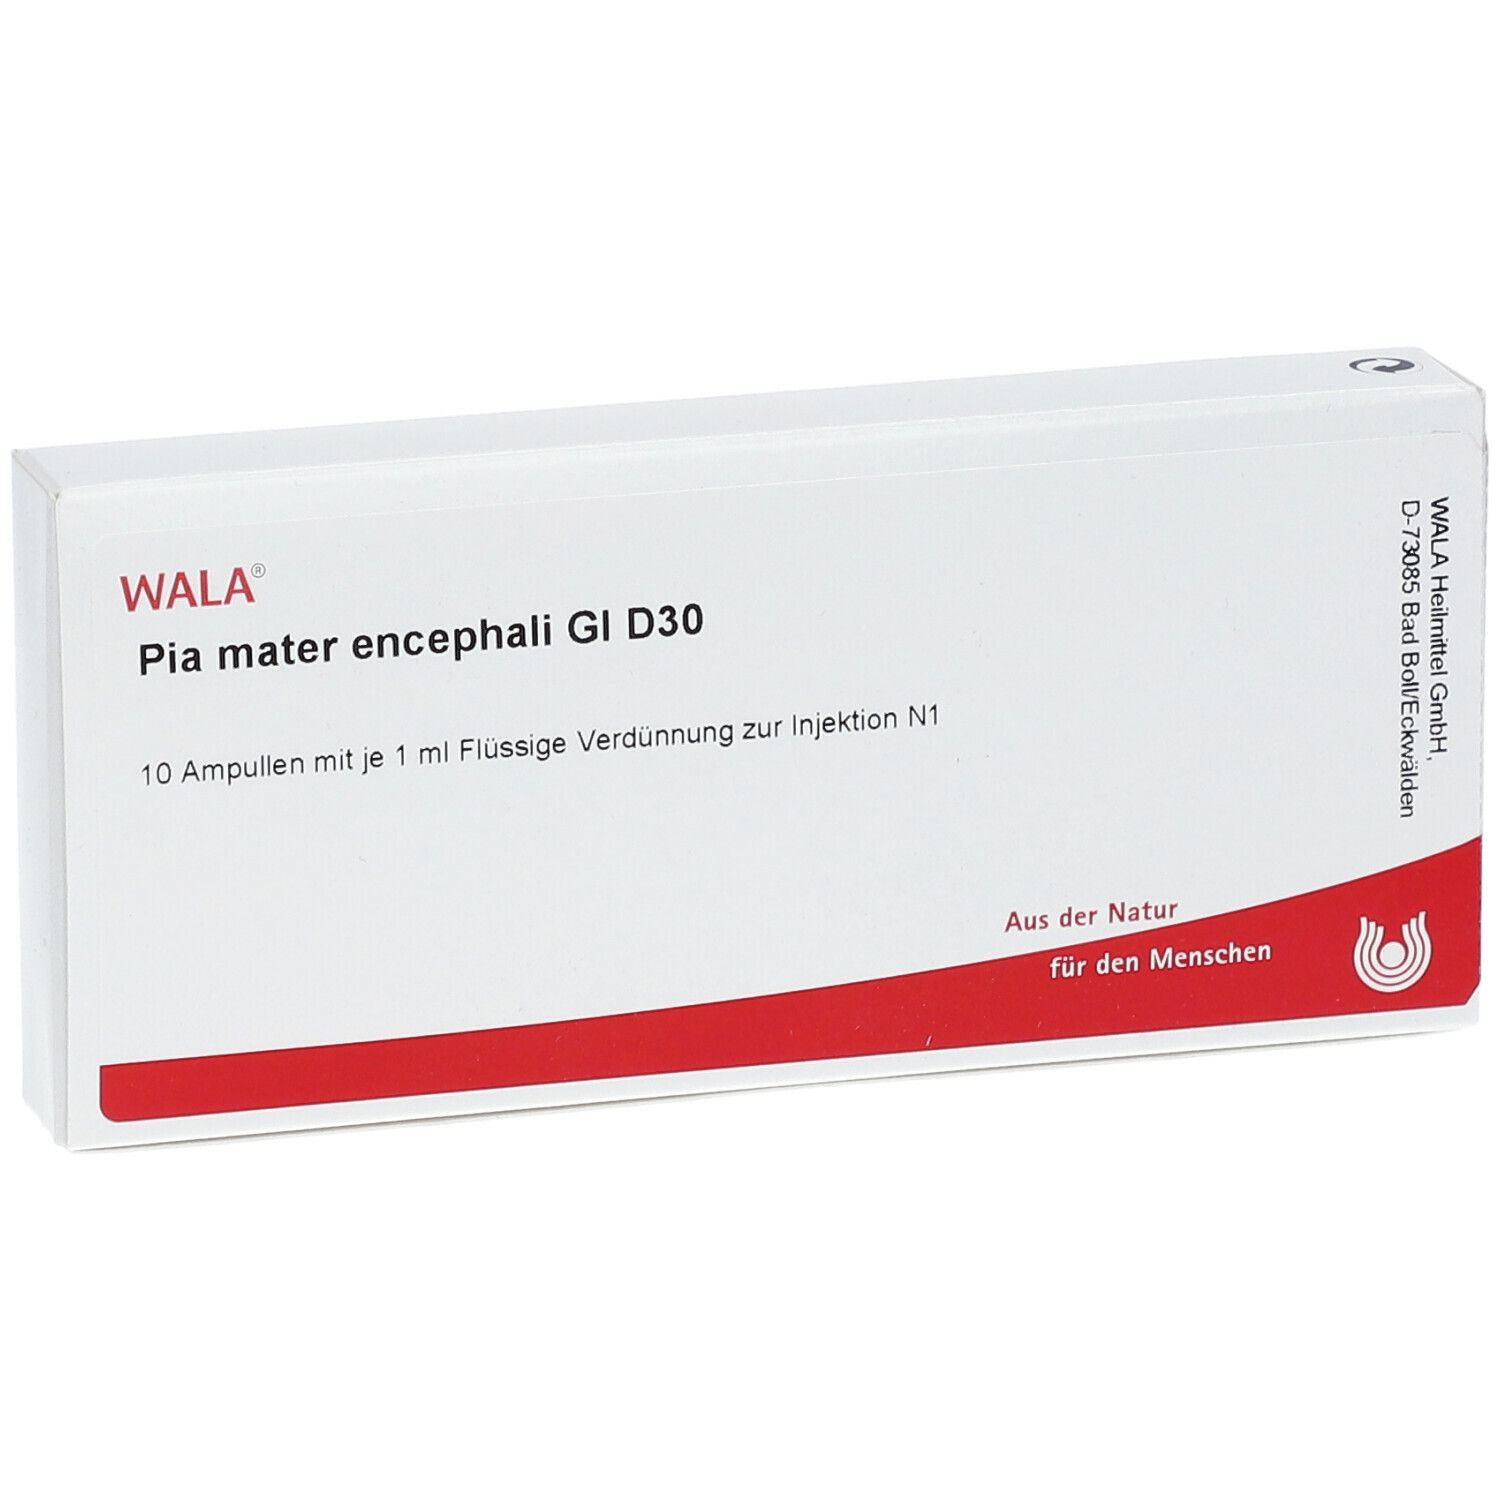 WALA® Pia mater encephali Gl D 30